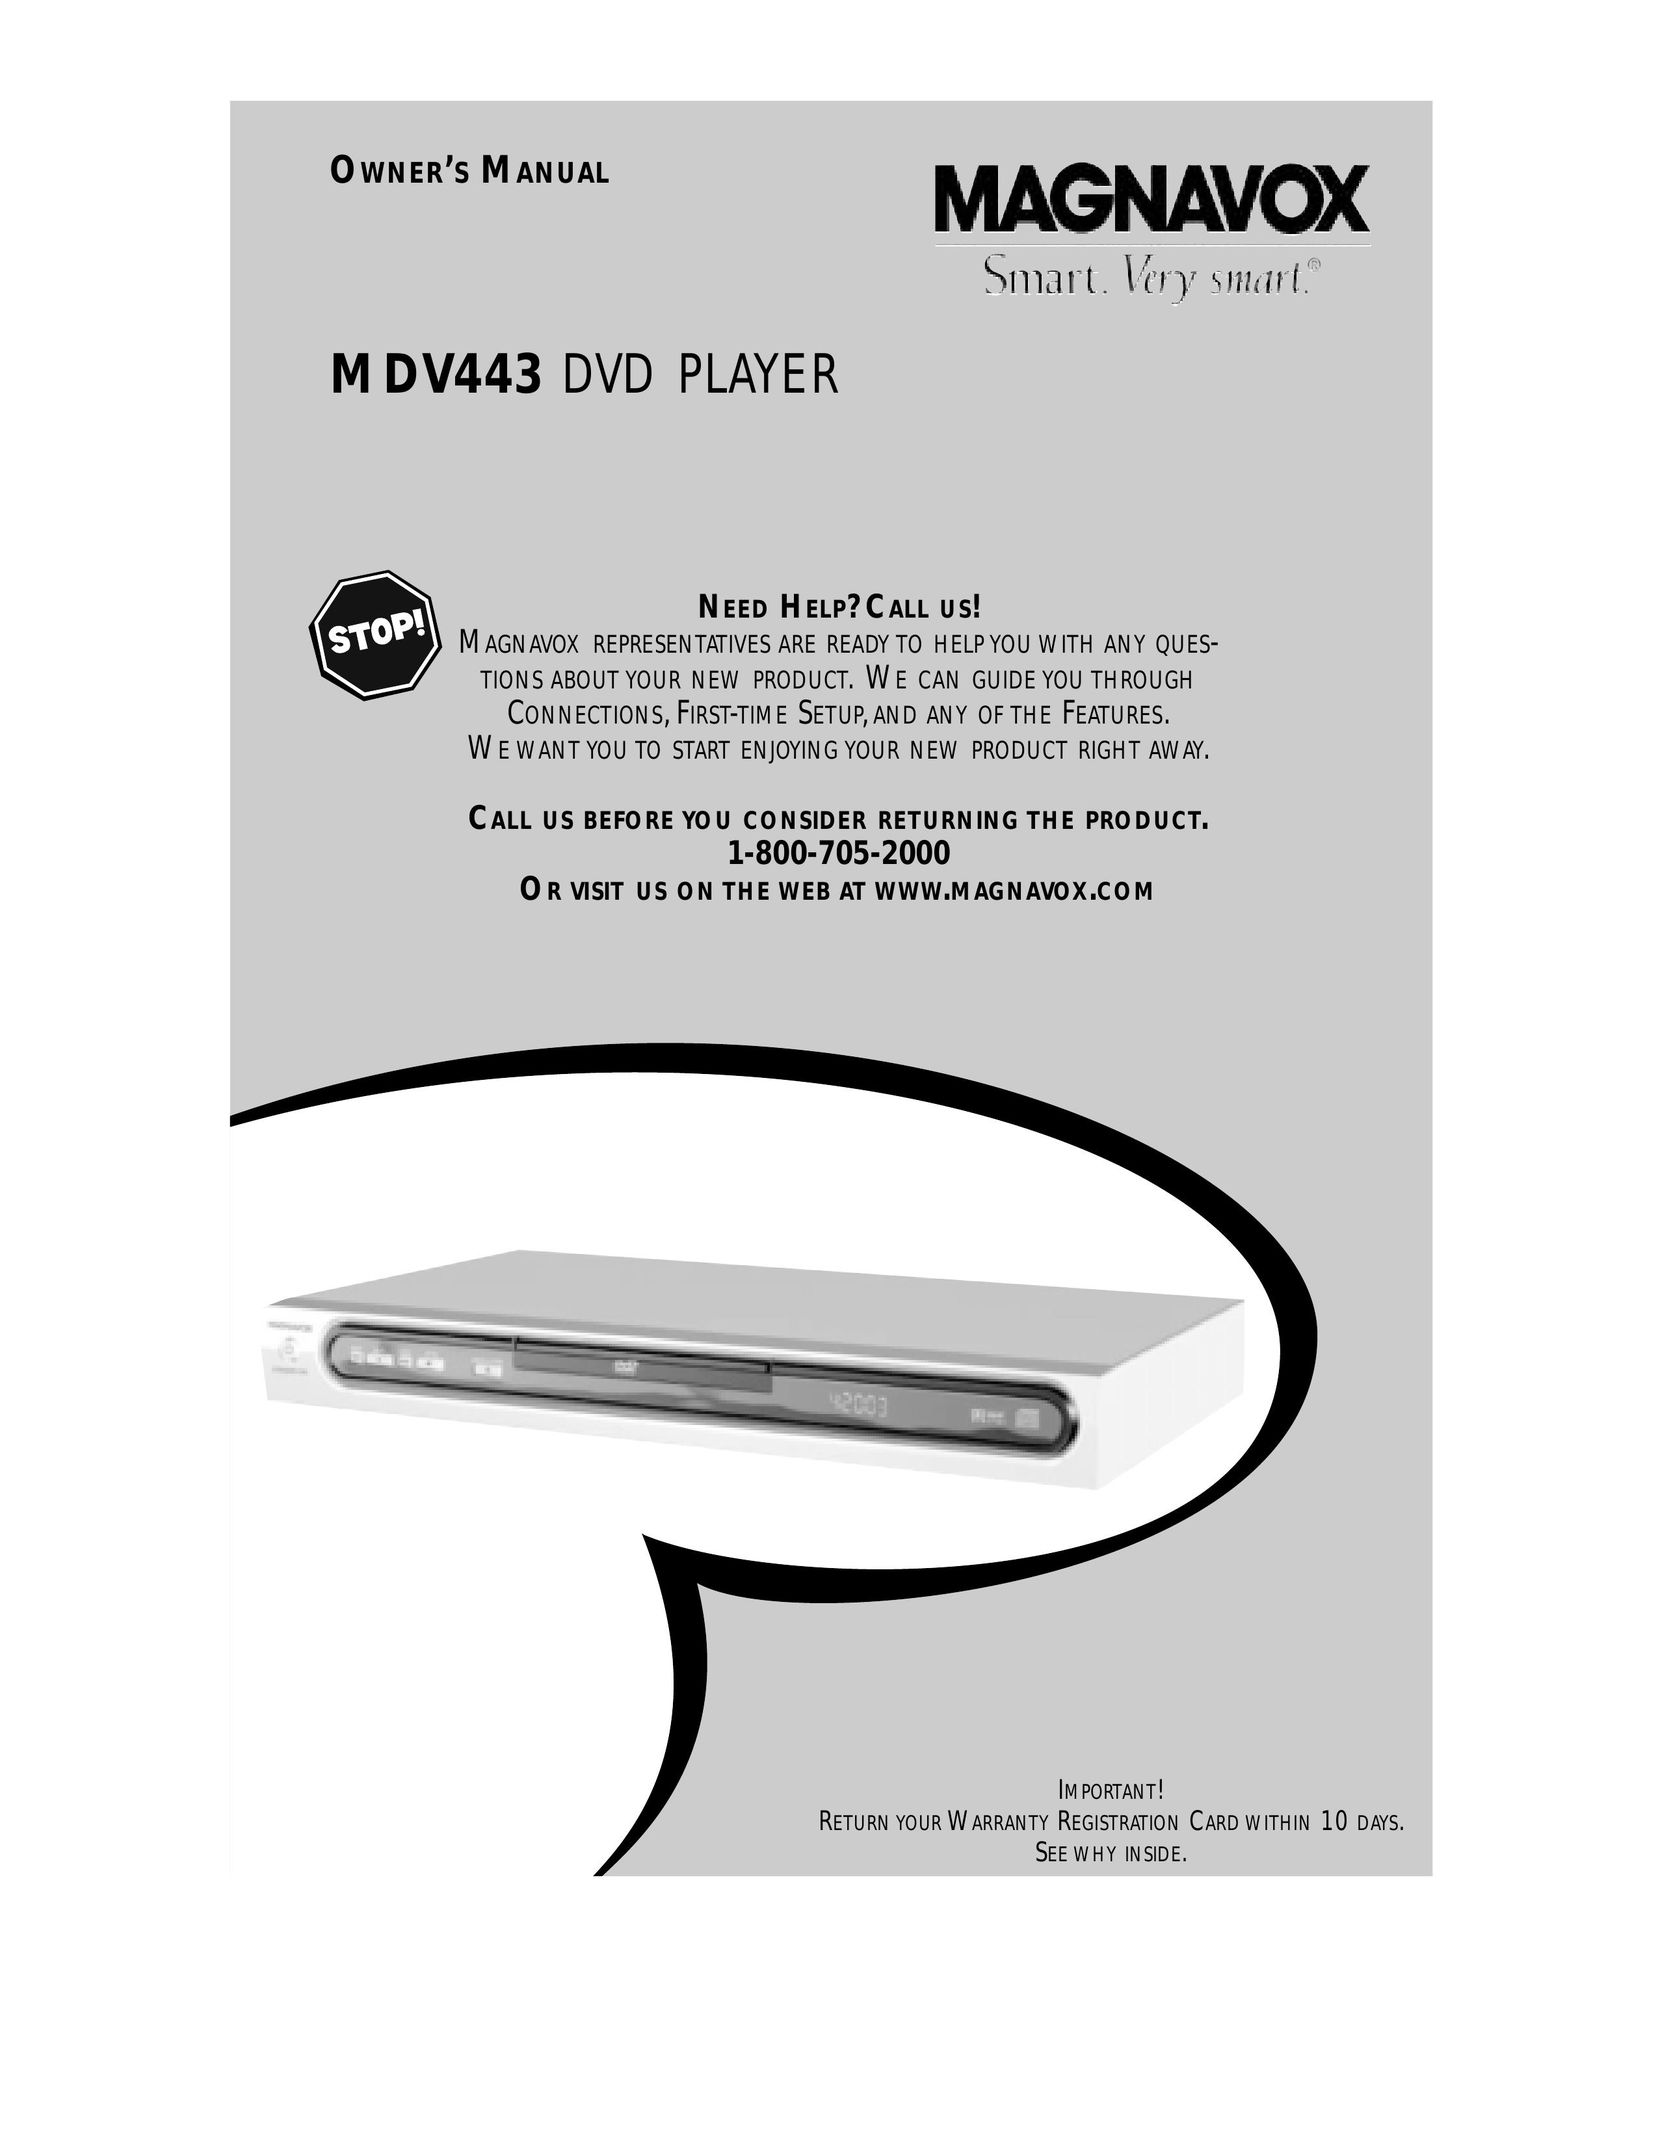 Magnavox MDV443 DVD Player User Manual